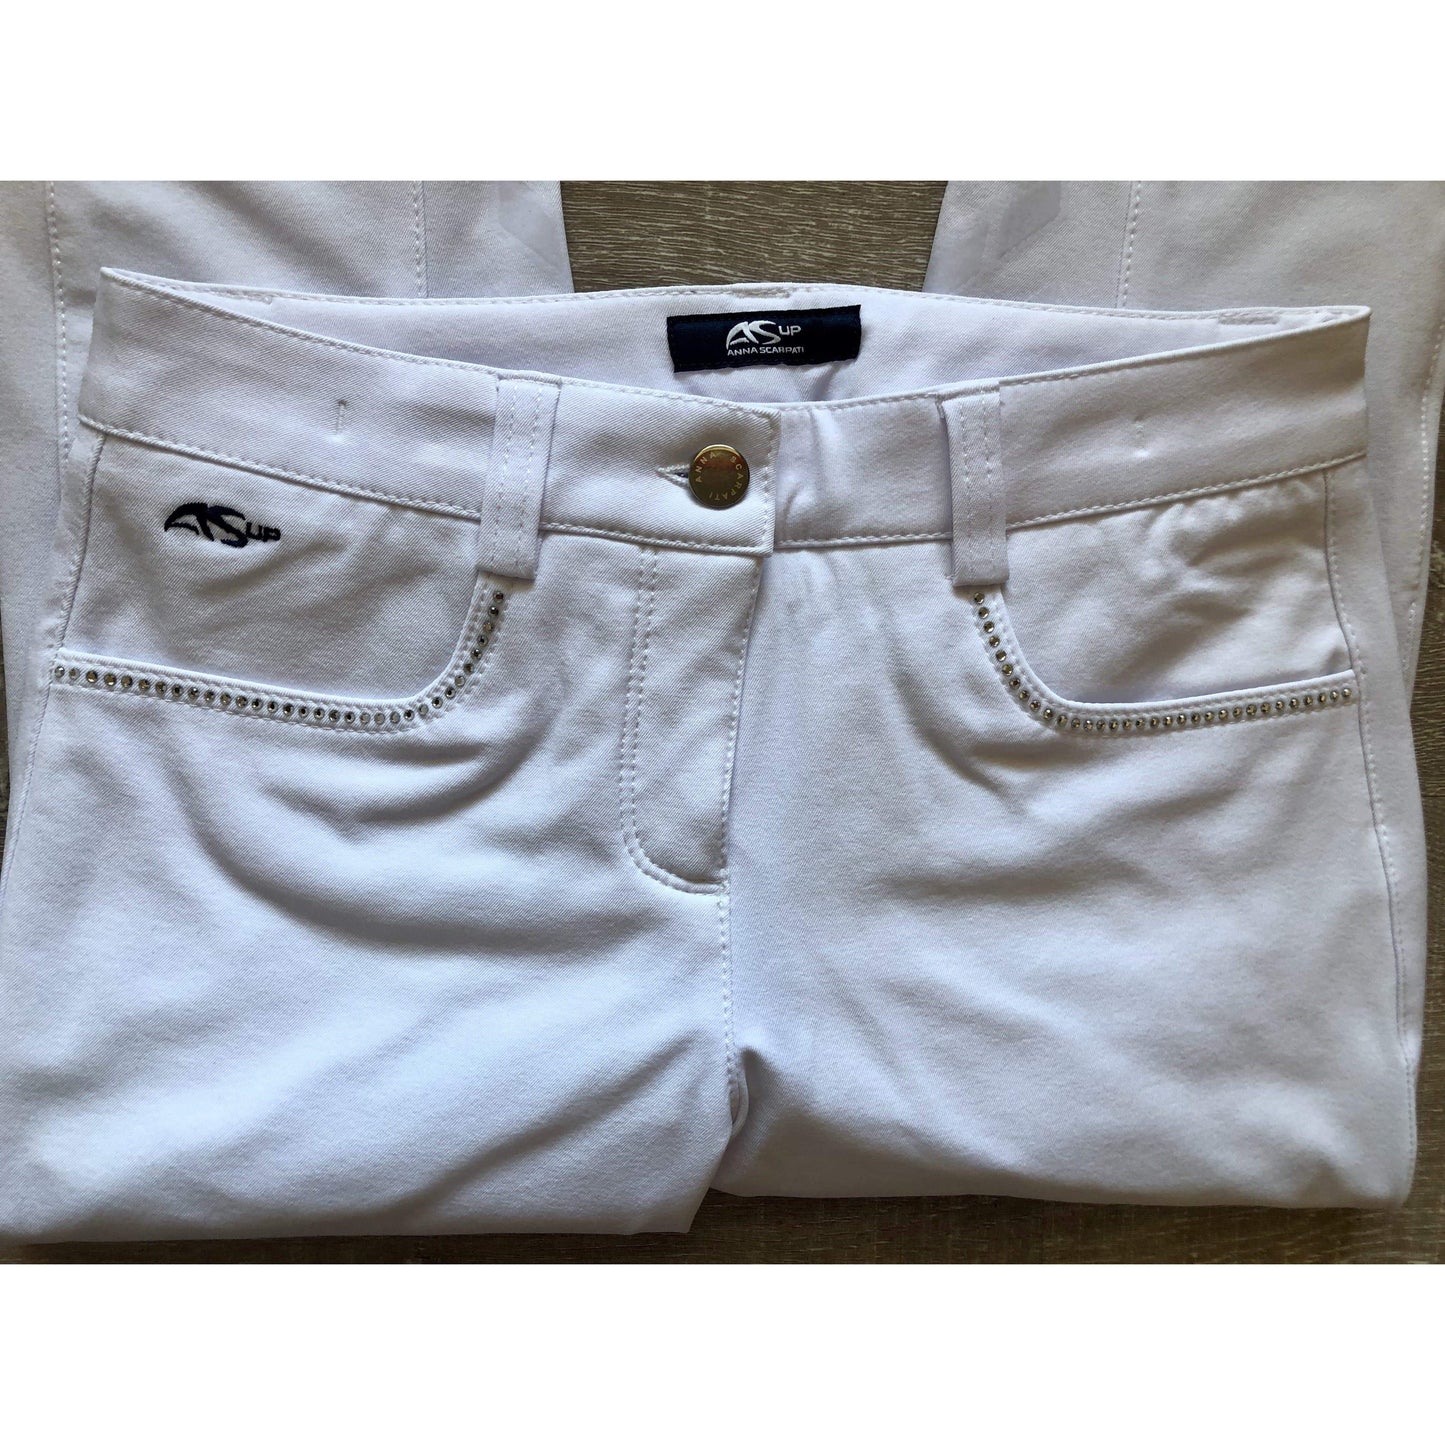 White Anna Scarpati pants with logo and rhinestone detail on pocket.